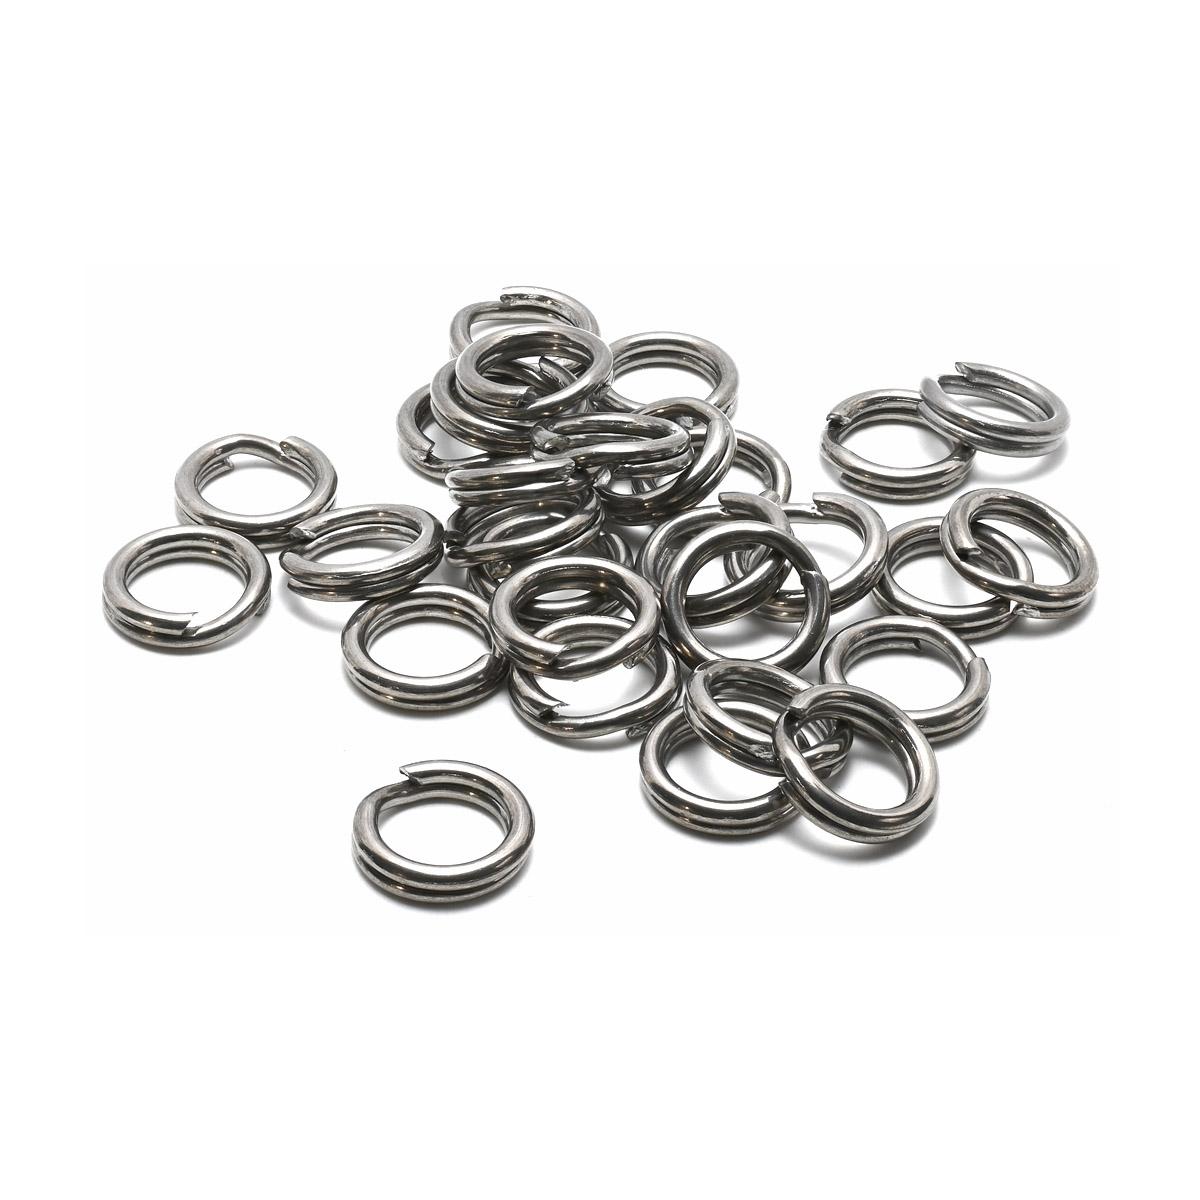 25 Stainless Steel Split Rings Size 4 40 lb test Fishing Lure Ring 